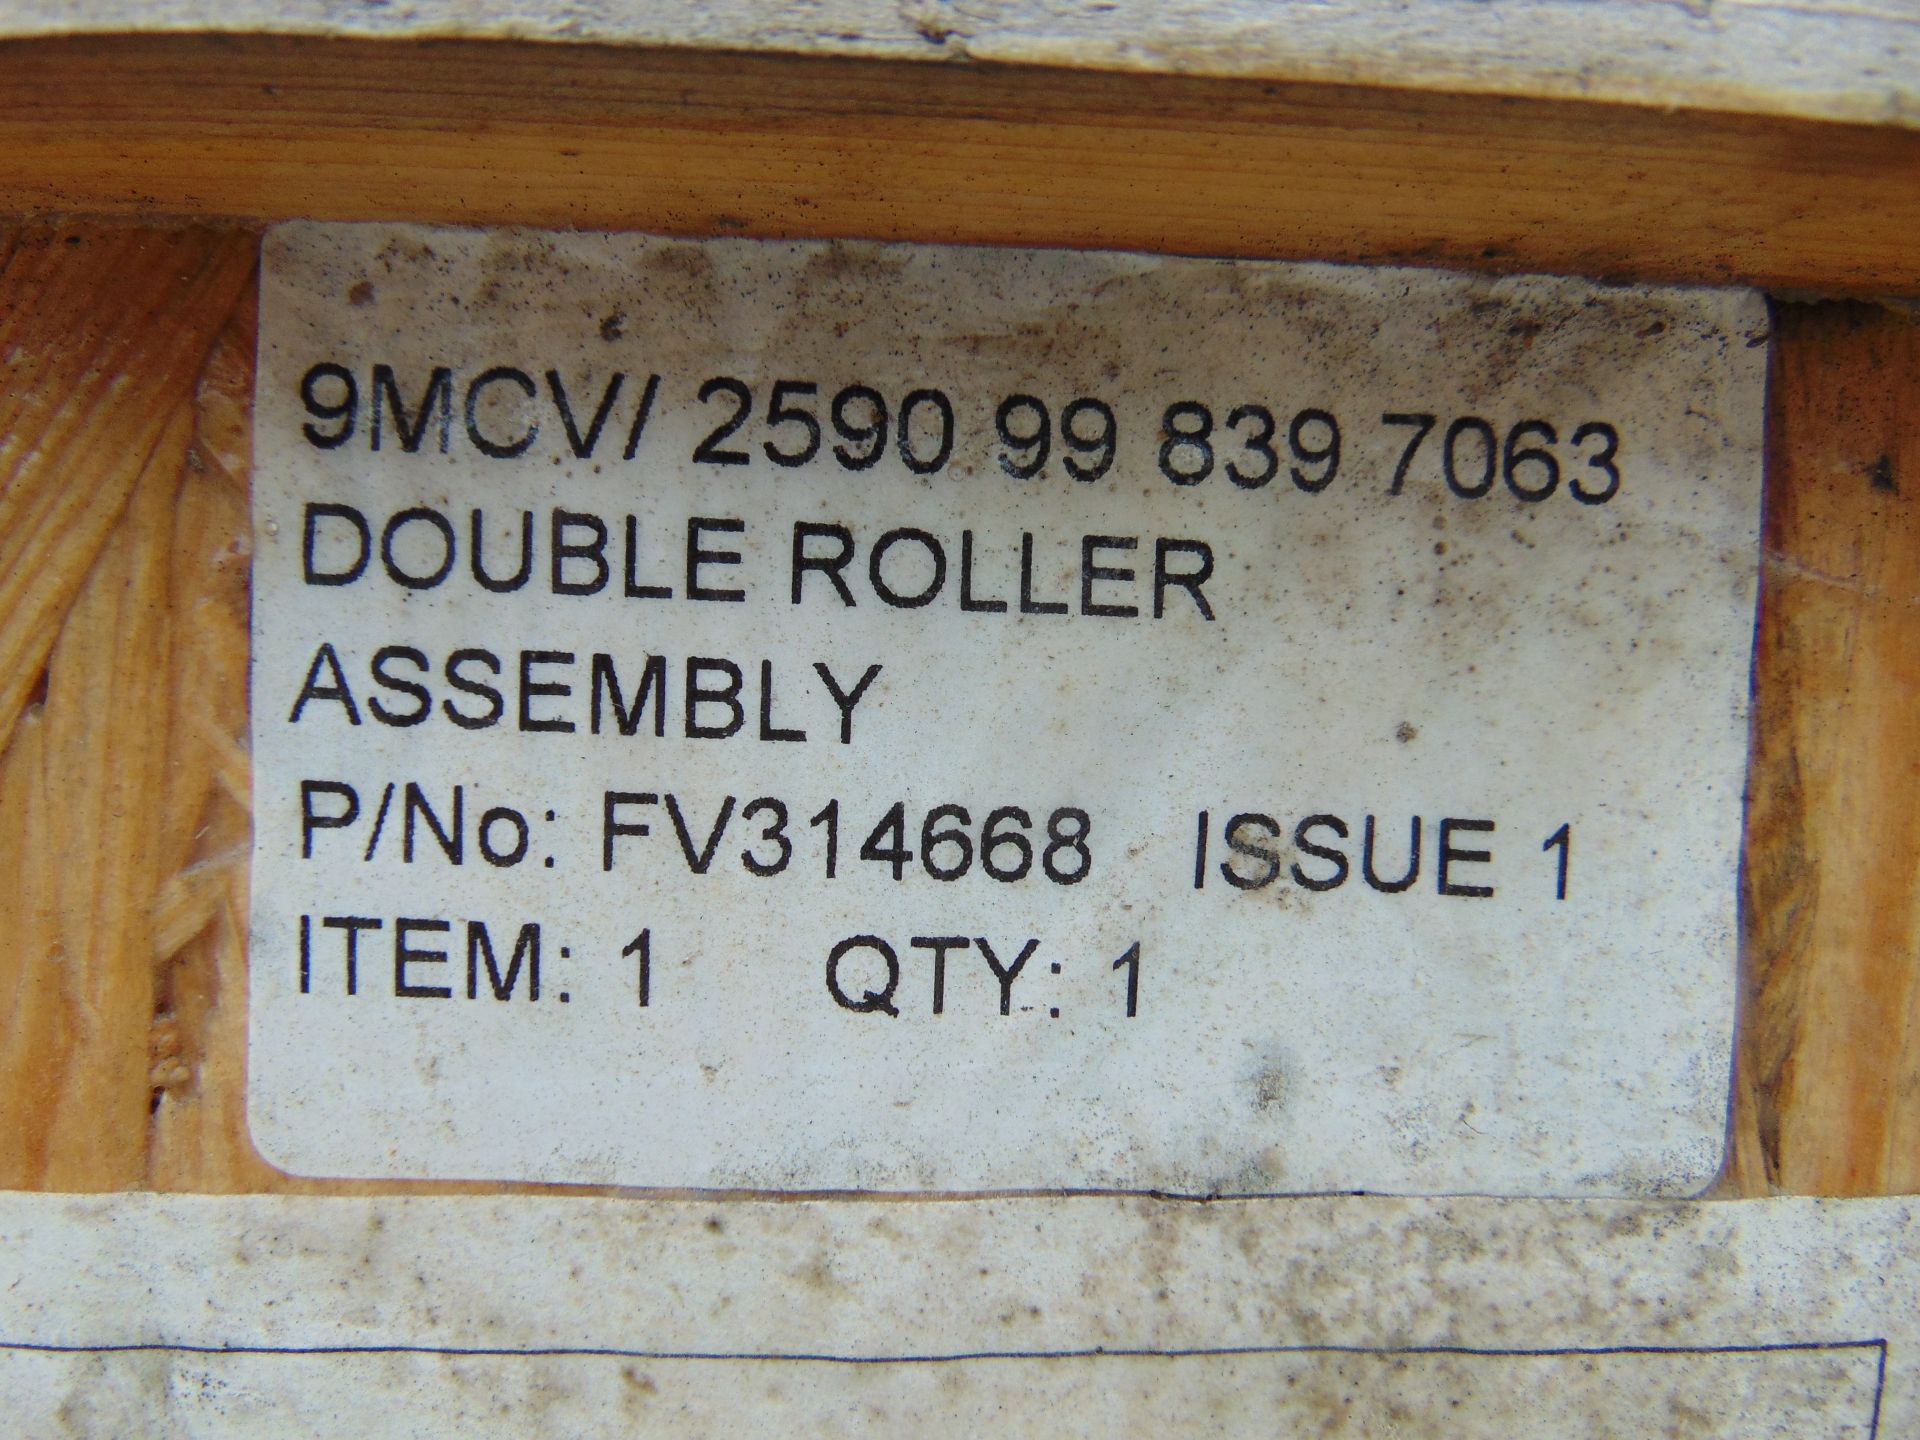 9MCV Double Roller Assy P/No FV314668 - Image 4 of 5